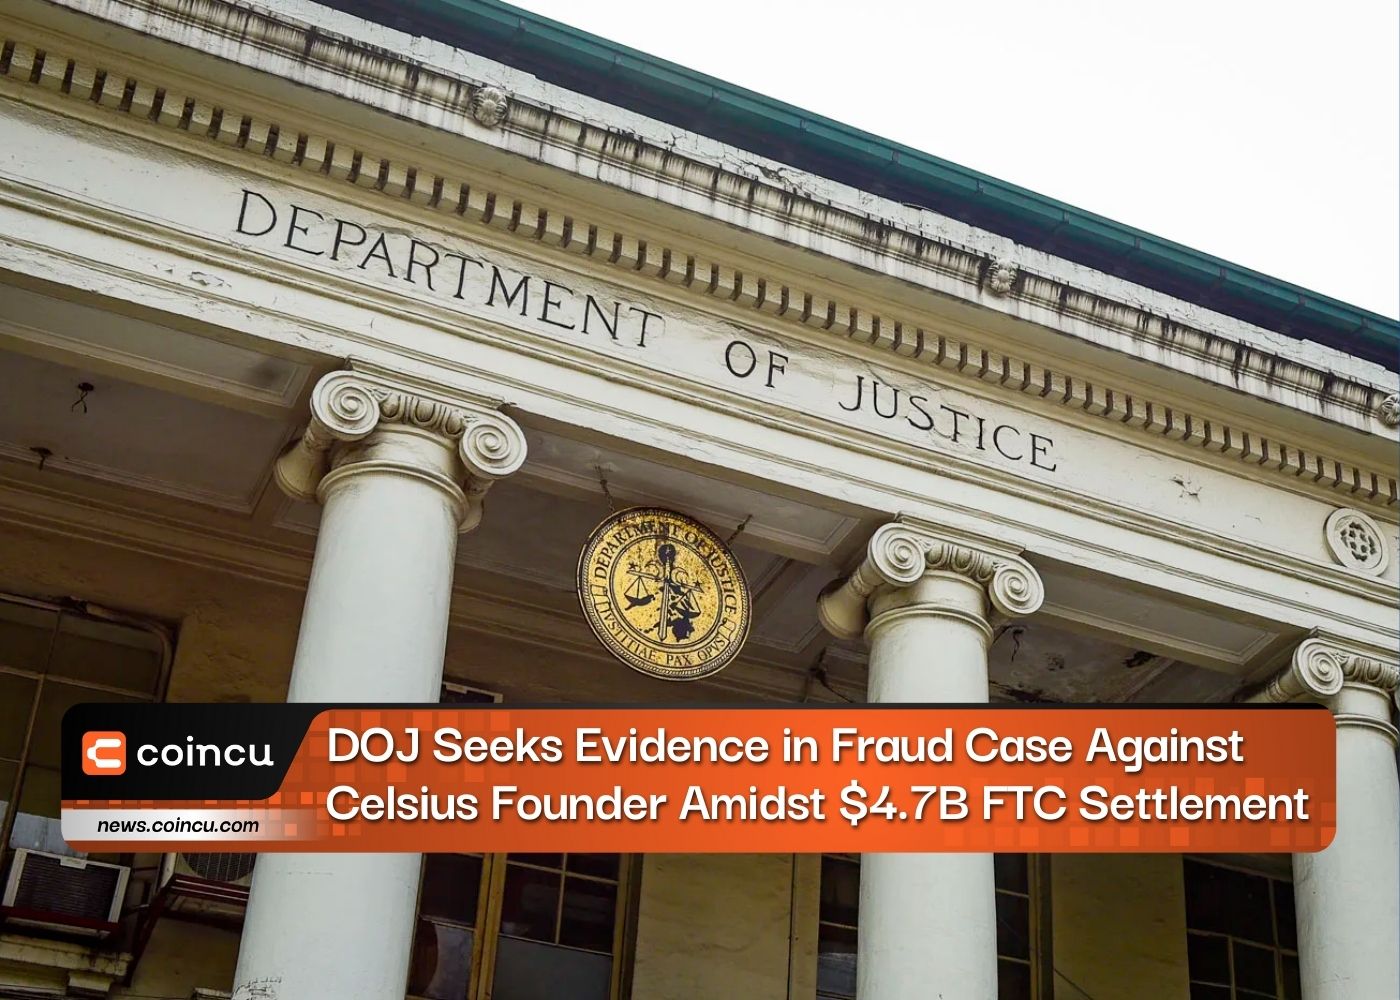 DOJ Seeks Evidence in Fraud Case Against Celsius Founder Amidst $4.7B FTC Settlement